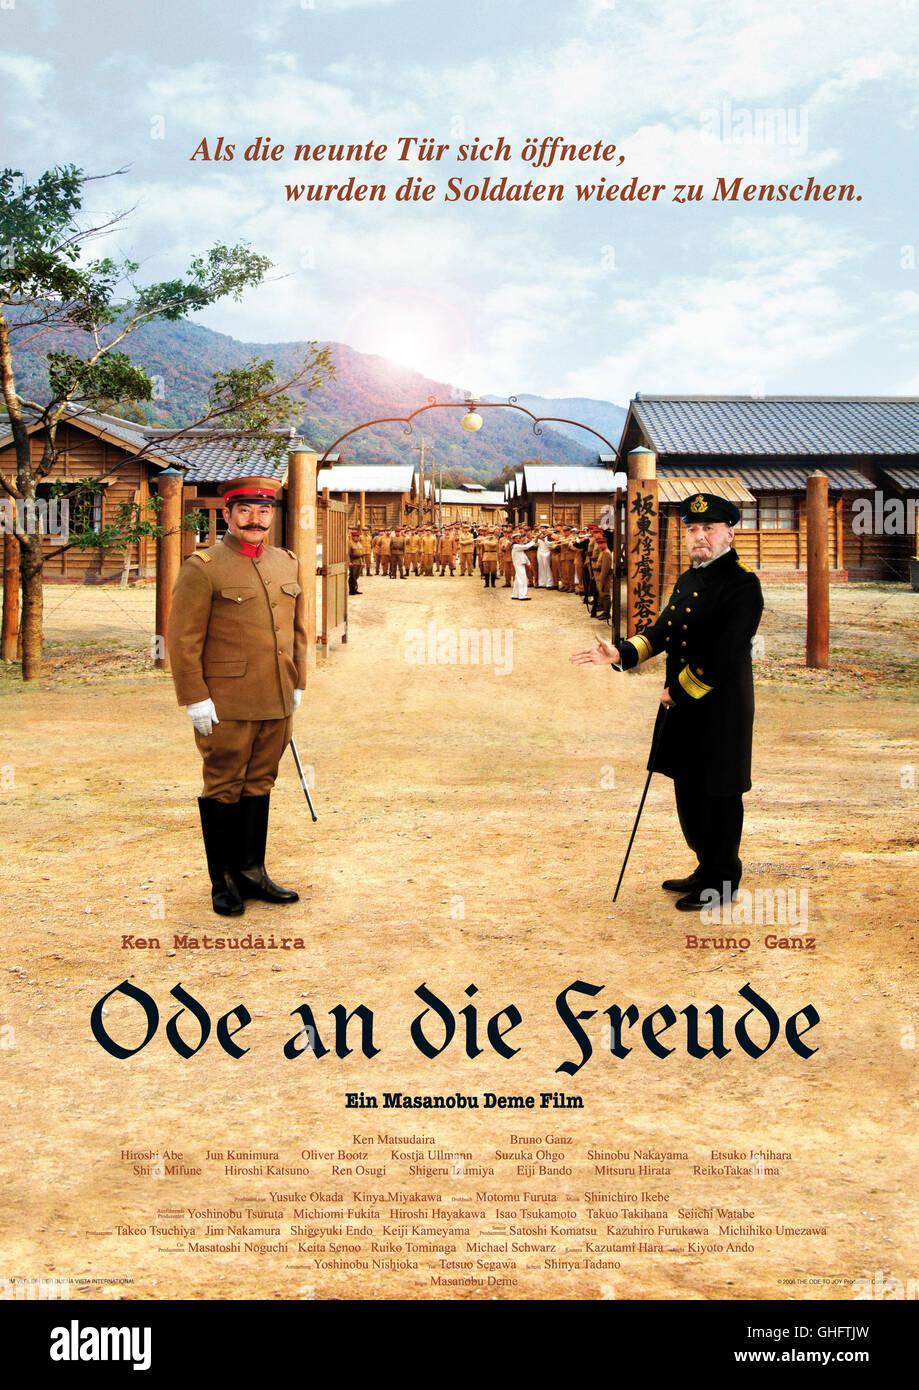 Ode an die Freude / Filmplakat Regie: Masanobu Deme aka. The Ode of Joy / Baruto no gakuen Stock Photo